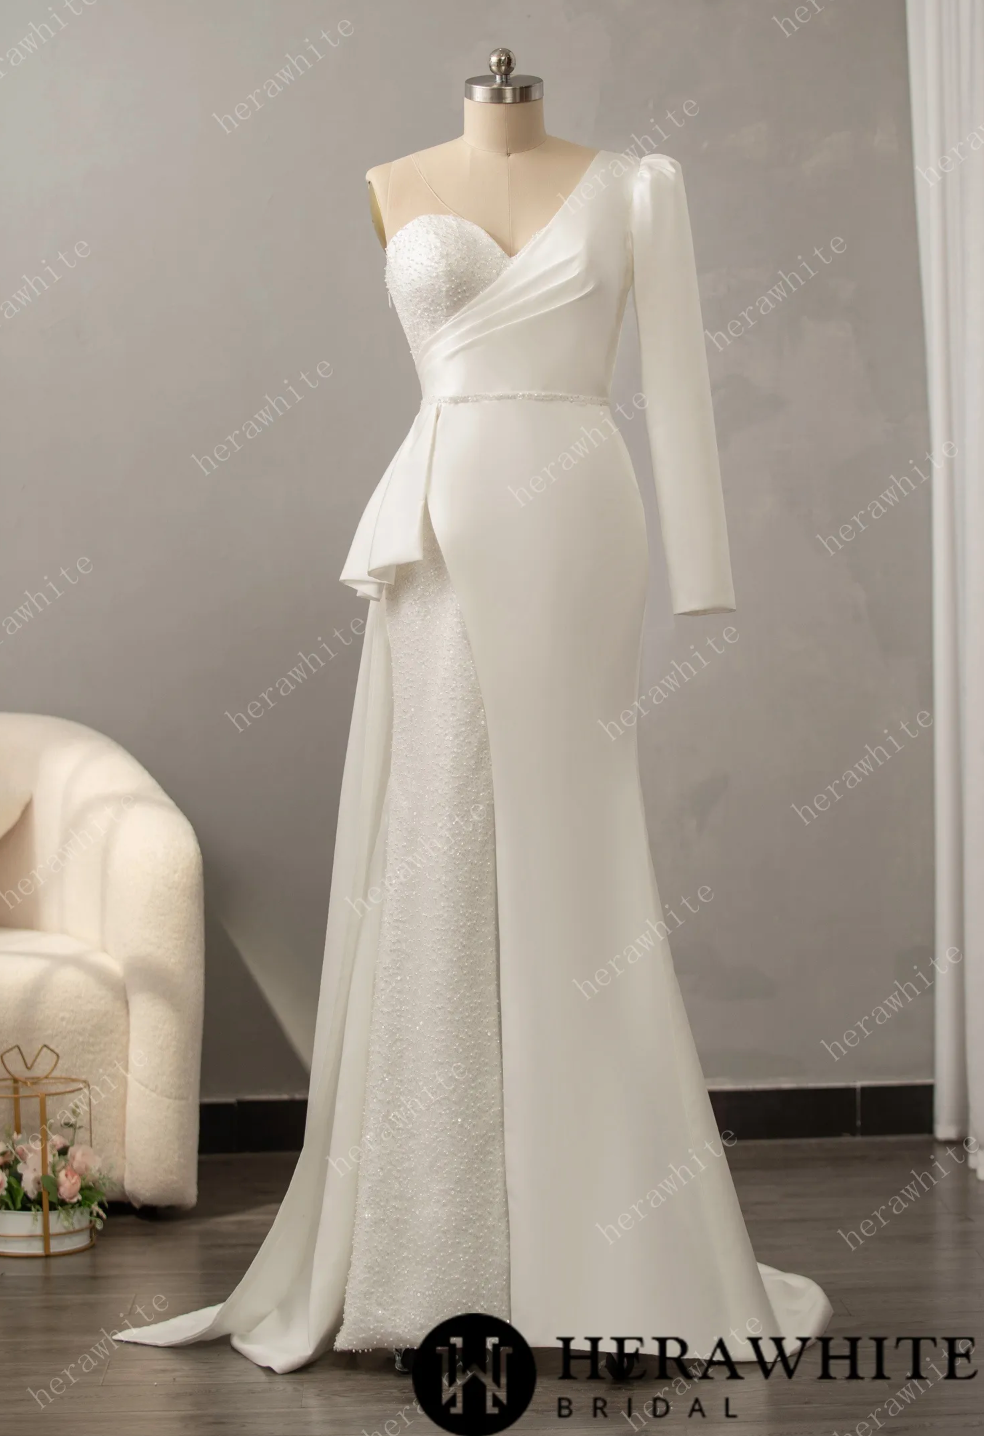 Sweetheart Neckline Wedding Dress with One Shoulder